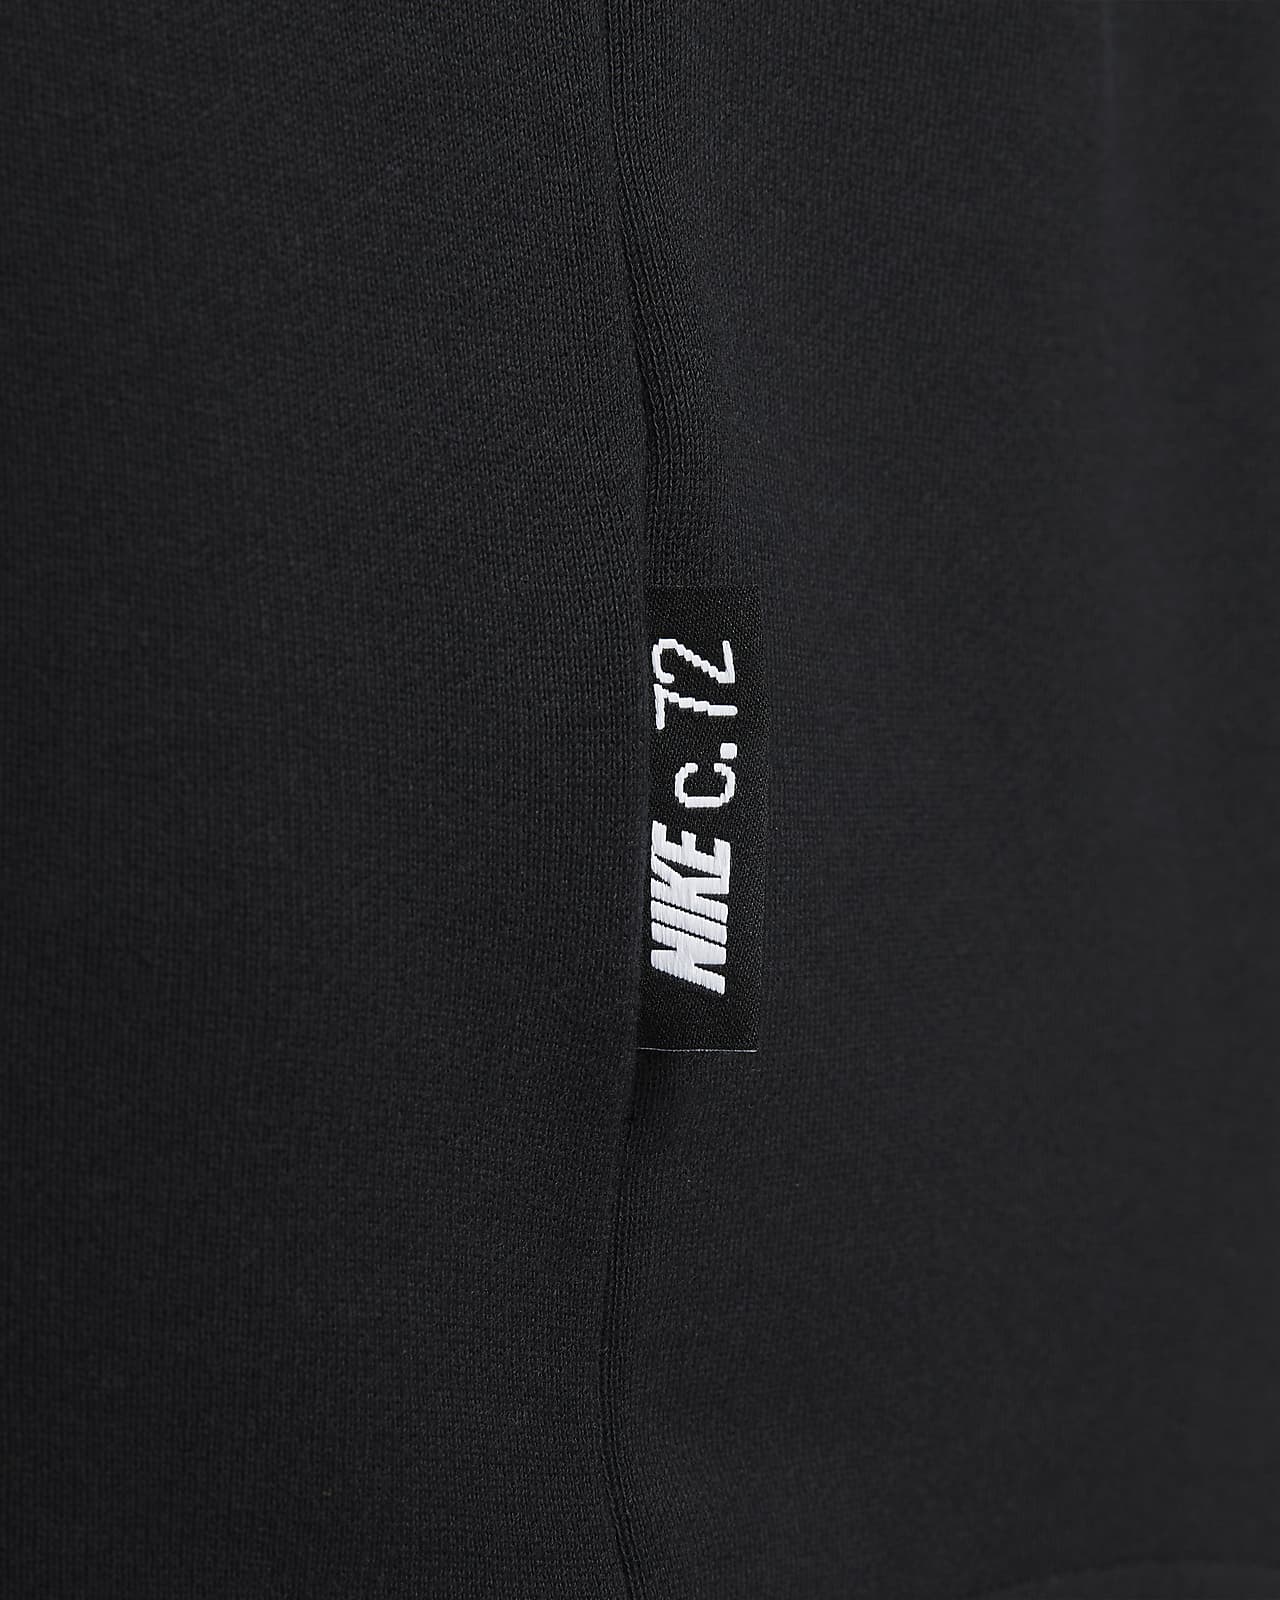 Nike Sportswear Circa Men's French Terry Short-Sleeve Top. Nike SA